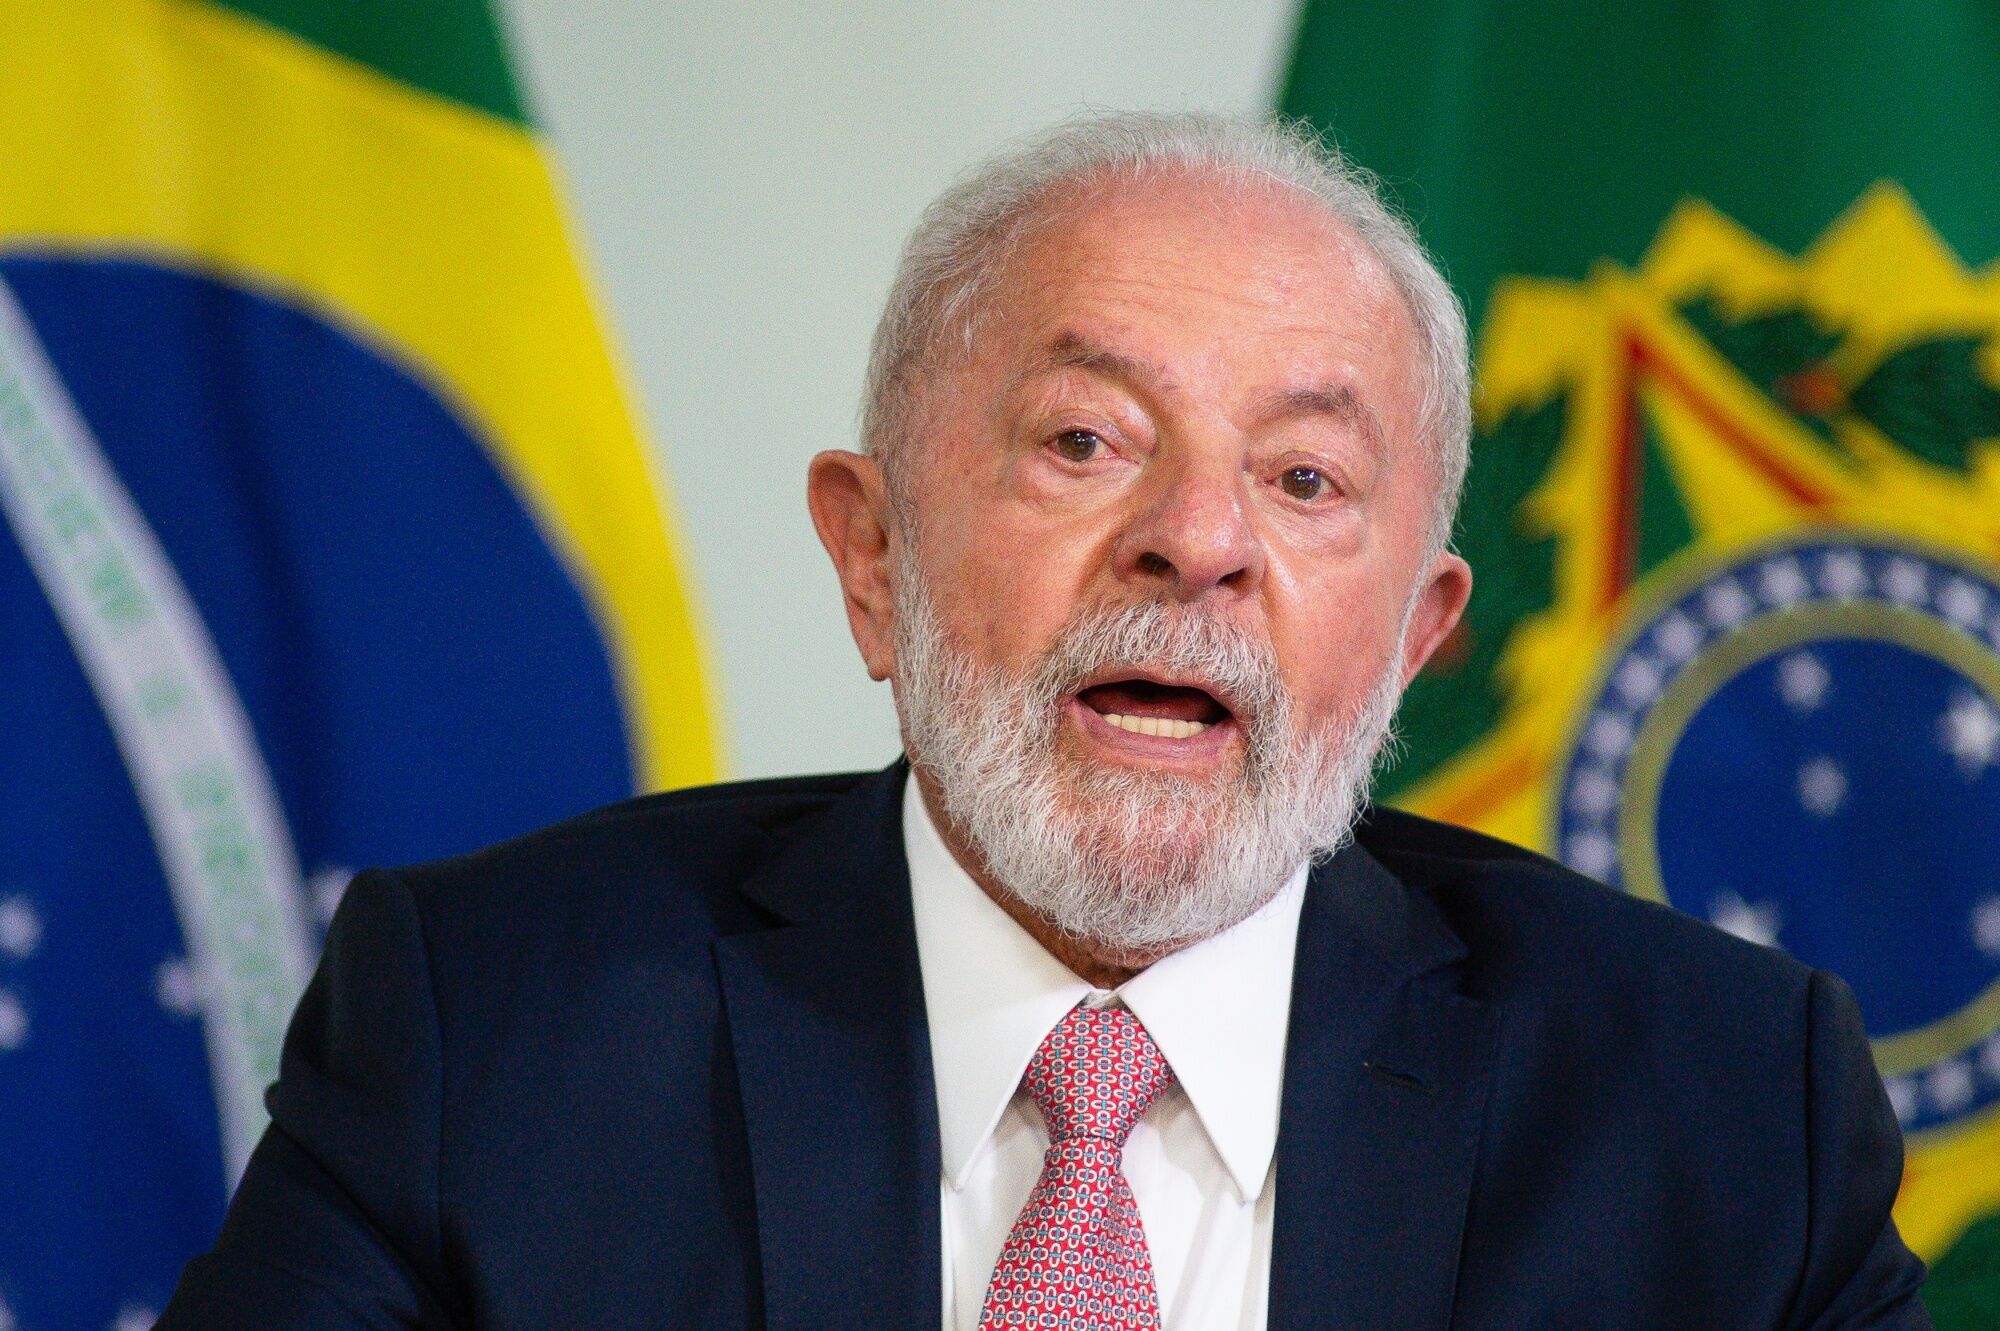 israel summons brazil ambassador after lula’s comments on gaza